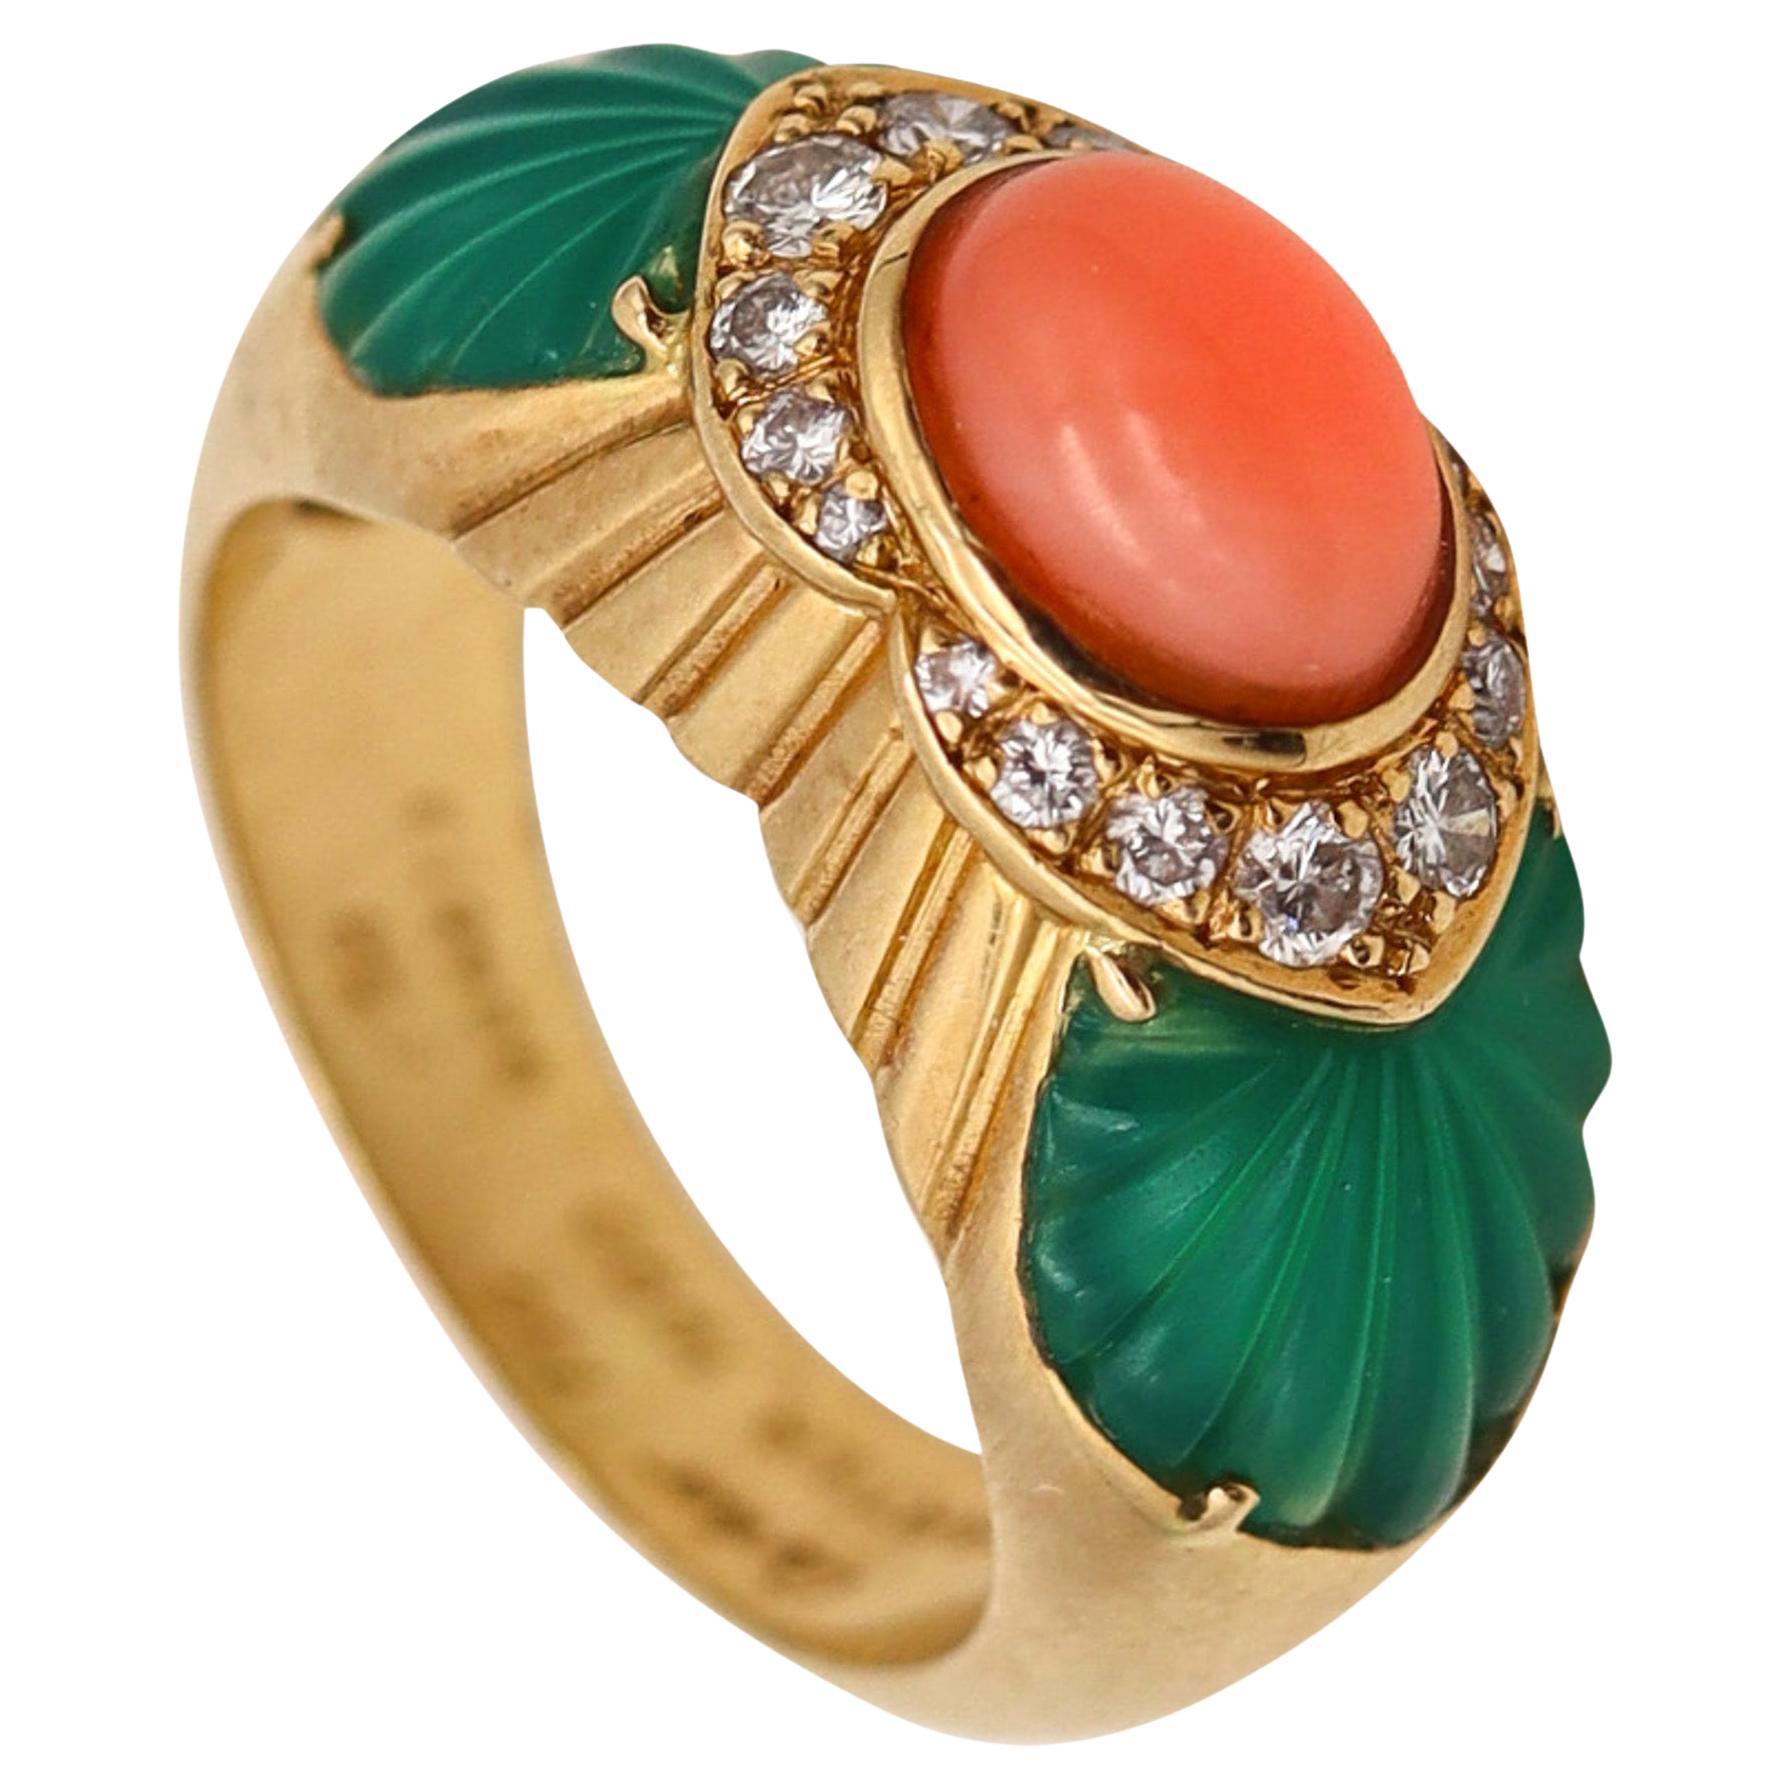 Ratnavali Gems & Jewellery | Product Details